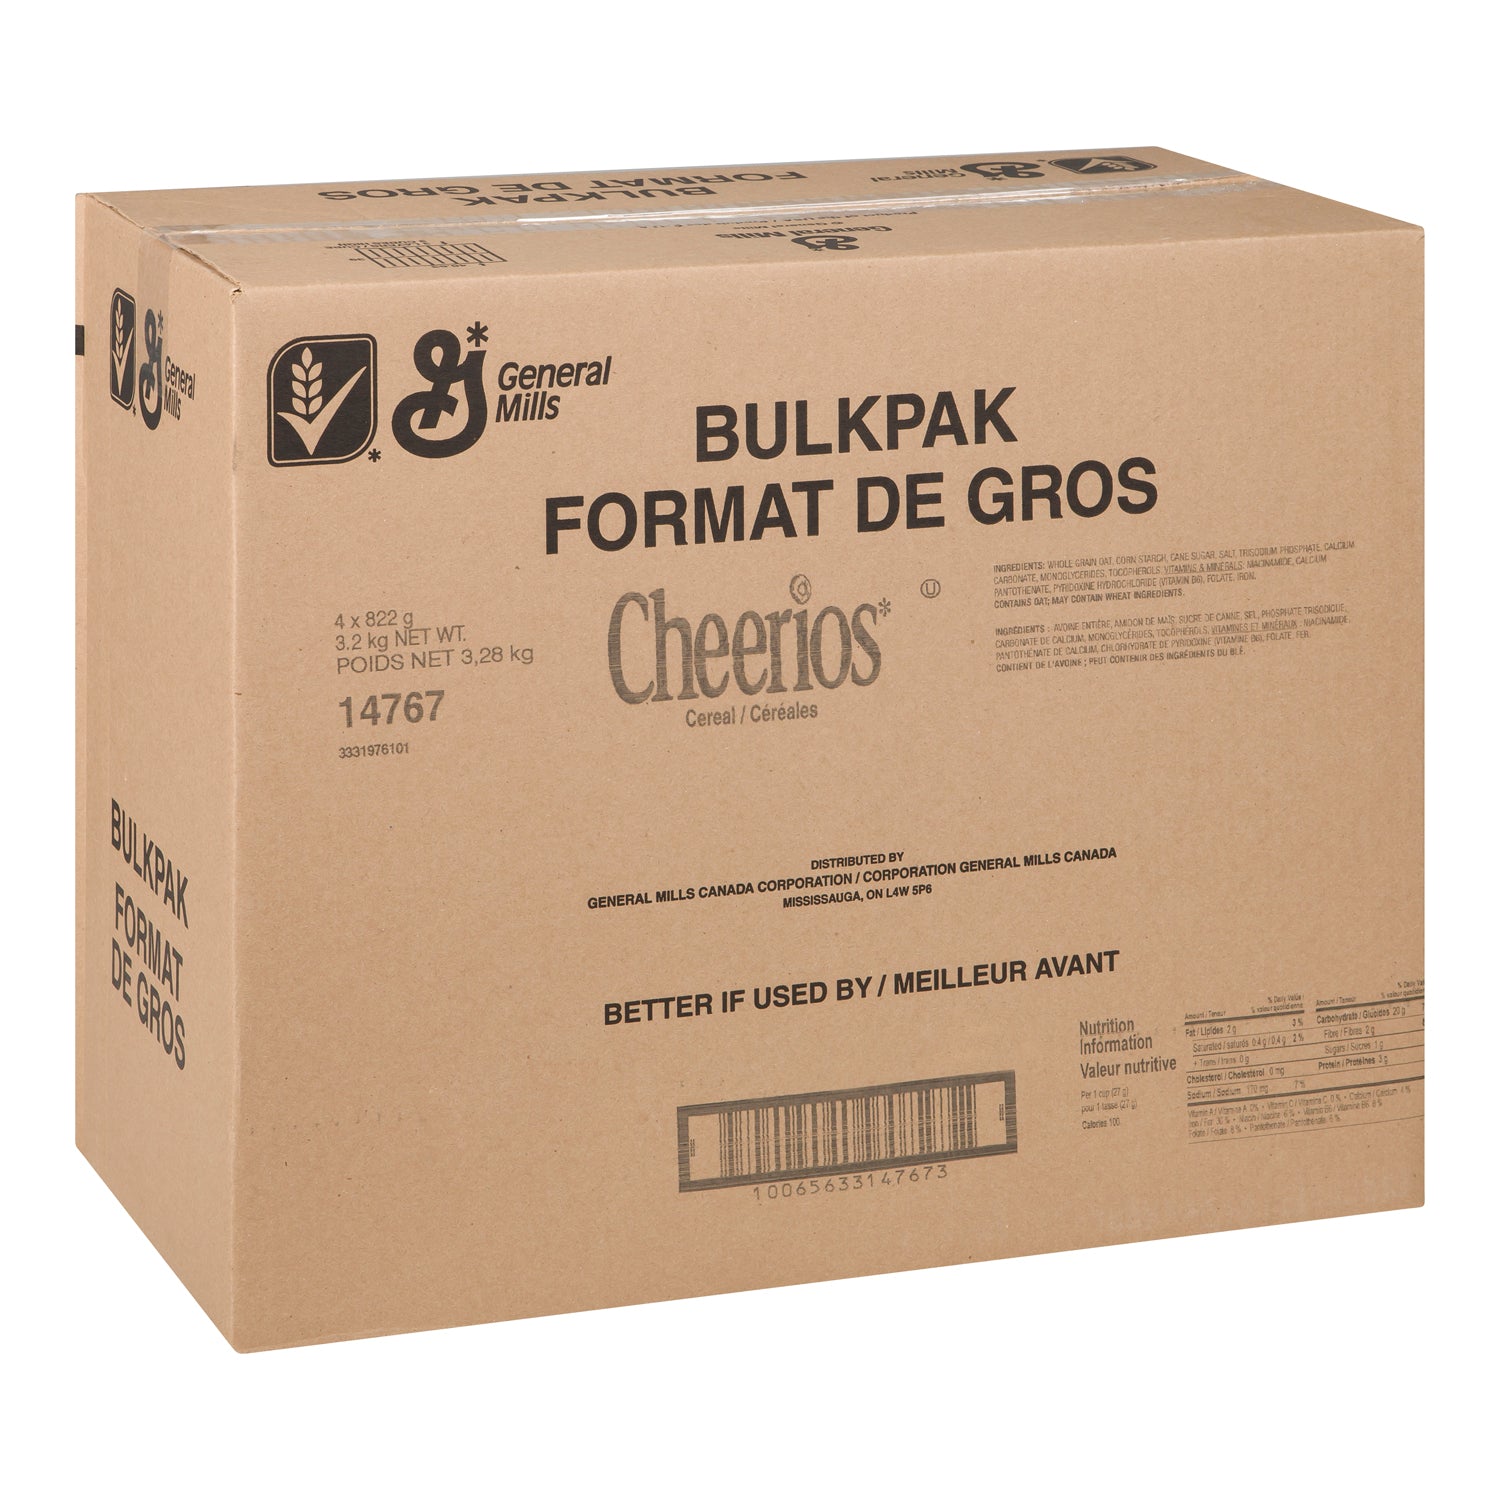 General Mills Cheerios Bulk Pack 4x822g [$0.33/serving]